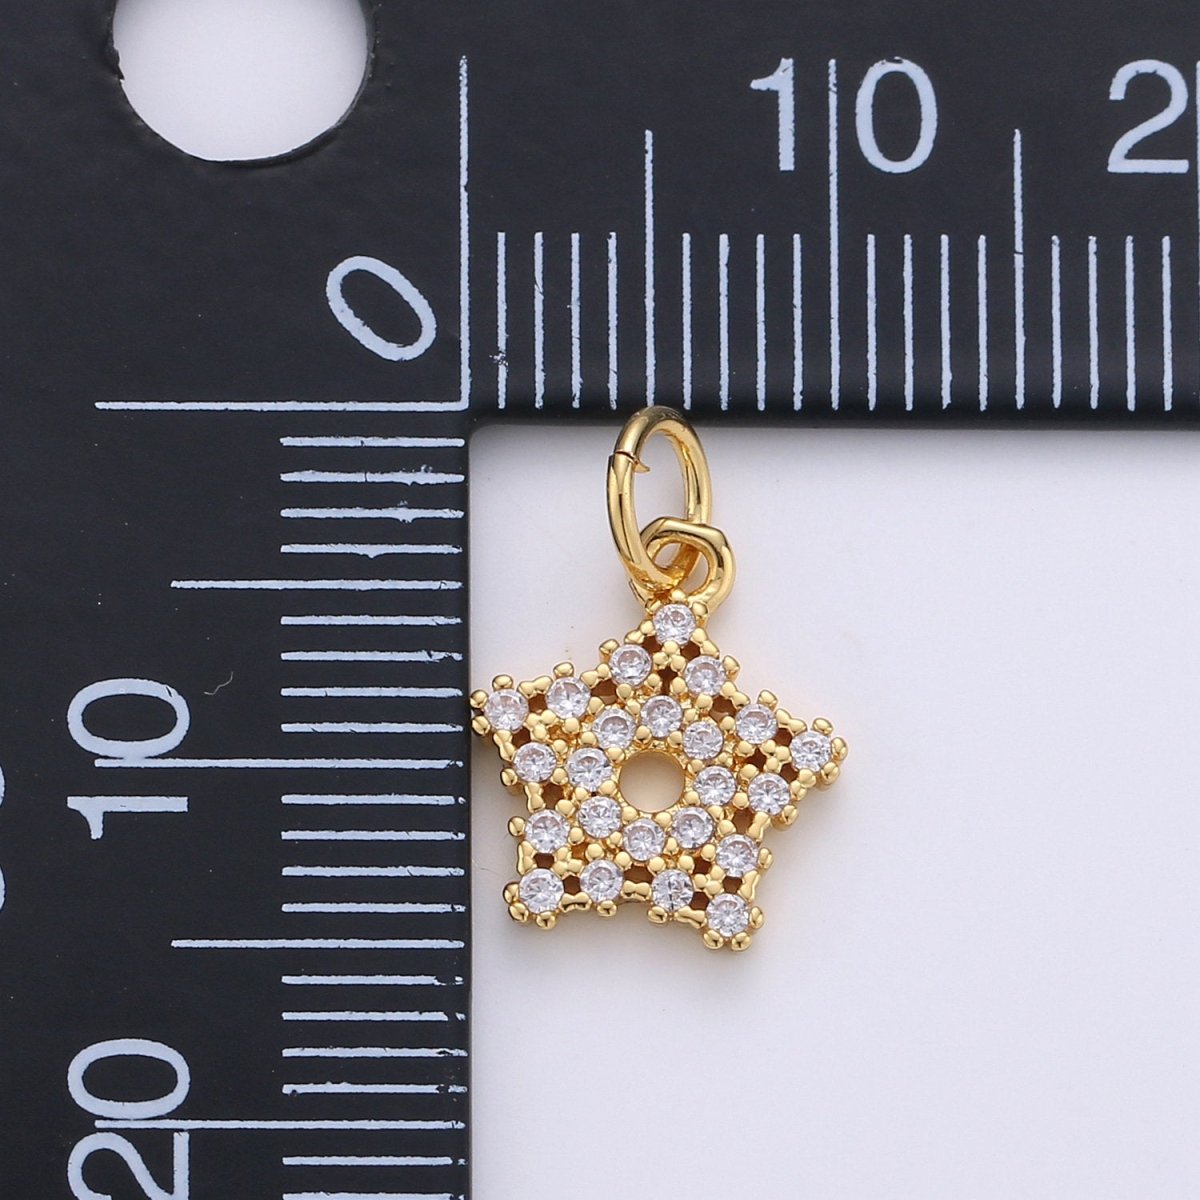 24K Gold Filled Tiny Twinkle Star Charm, Silver Tiny Little Star Gold Wish Star Charm, Dainty Small Cute CZ Charm Bracelet Earring Supply, D-266 D-267 - DLUXCA